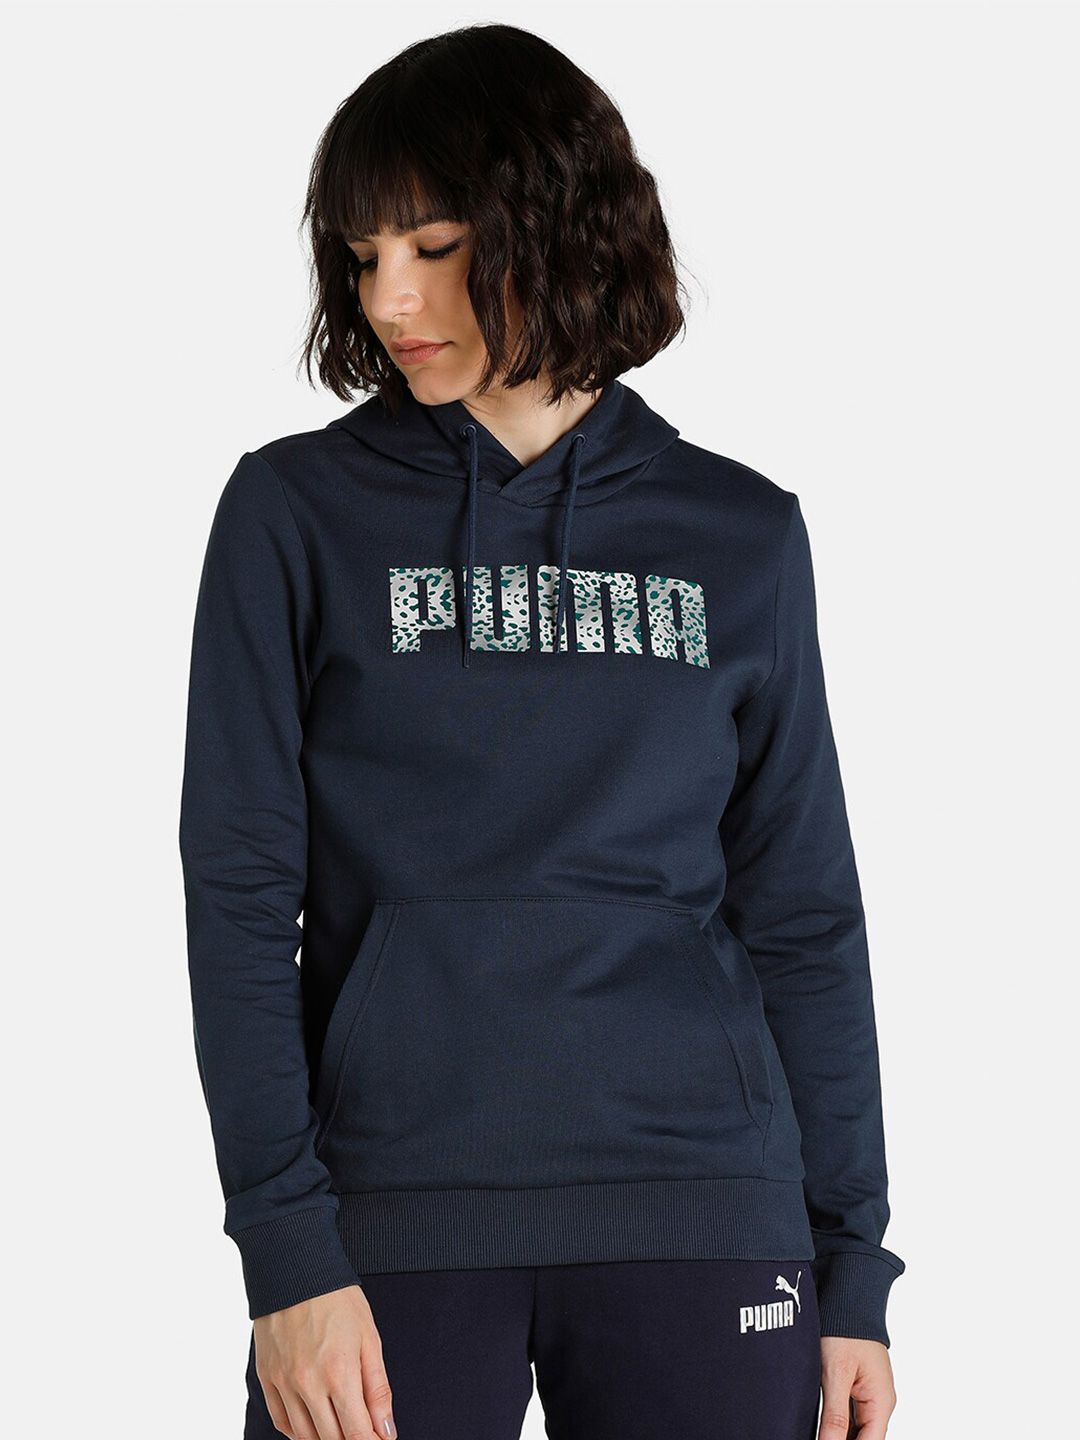 Puma Women Blue Printed Hoodie Sweatshirts Price in India